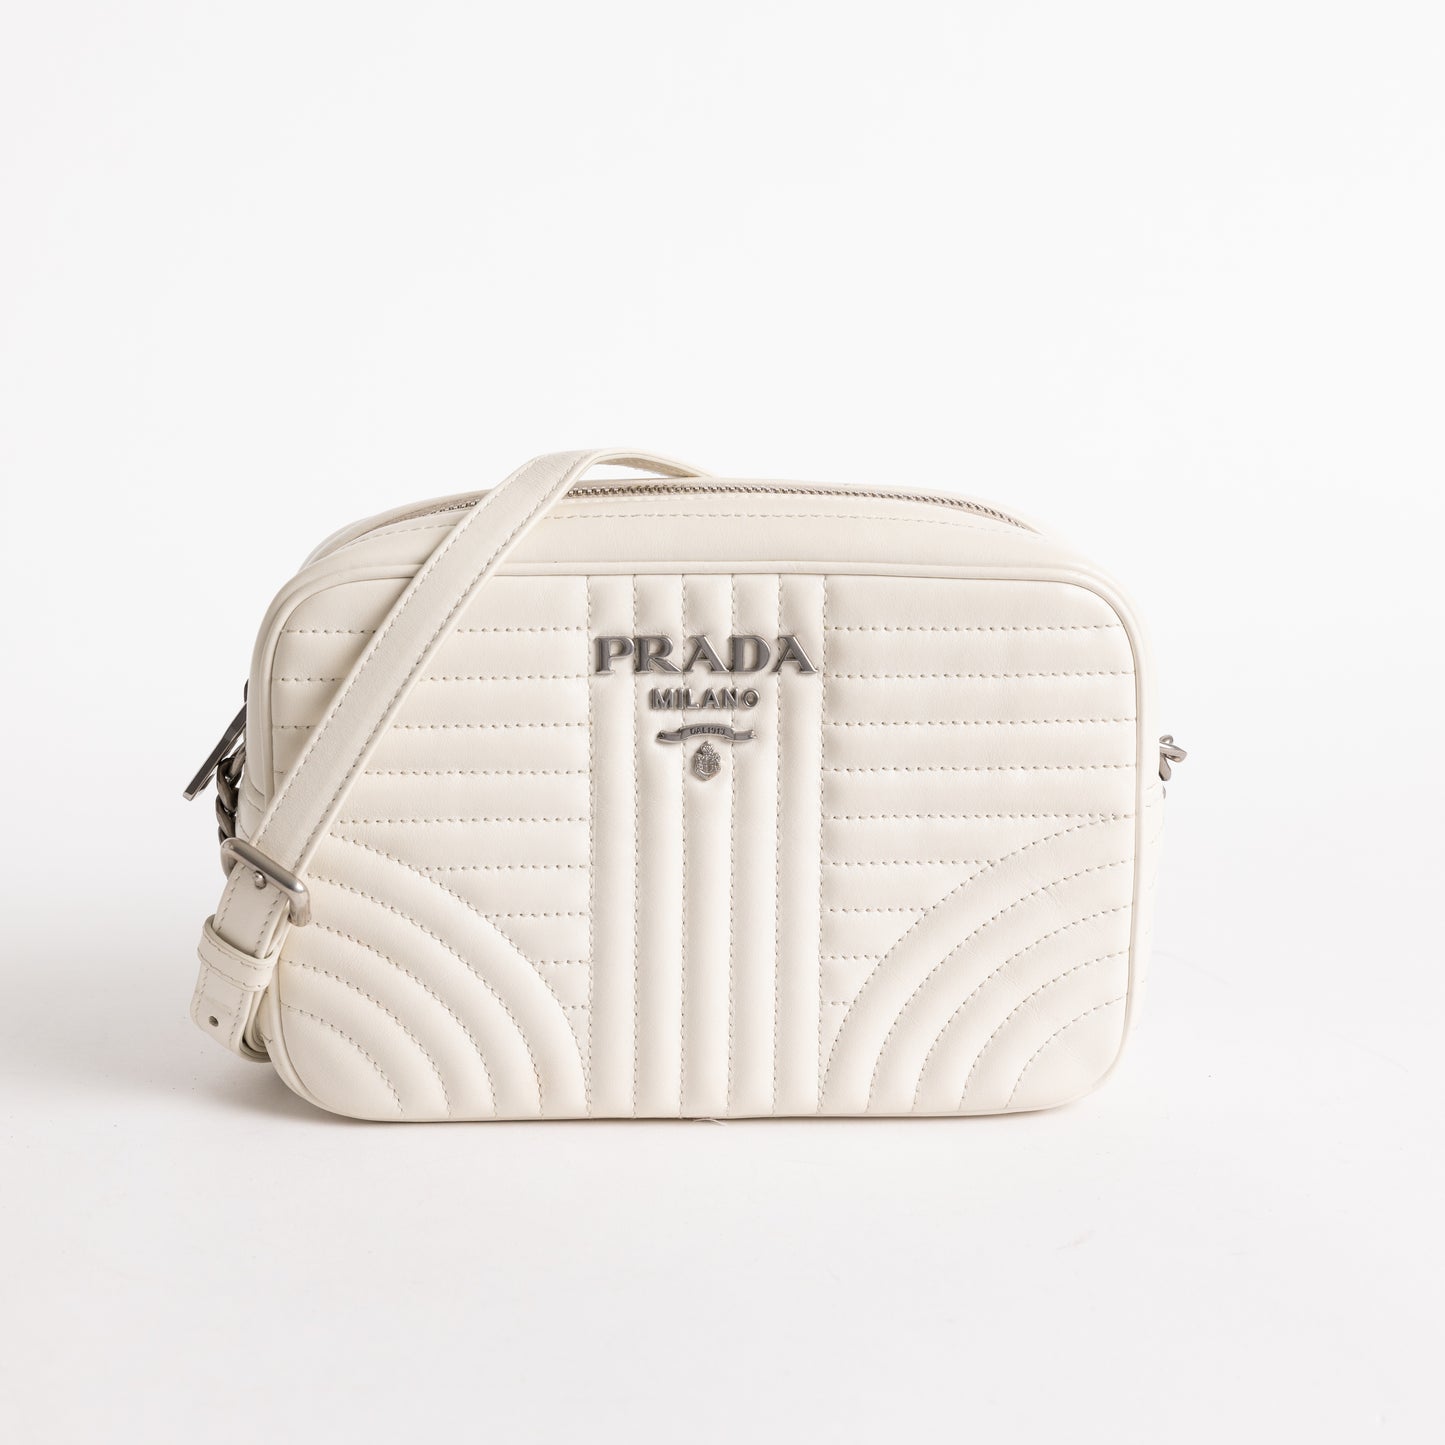 Prada Chain Camera Bag, Cream